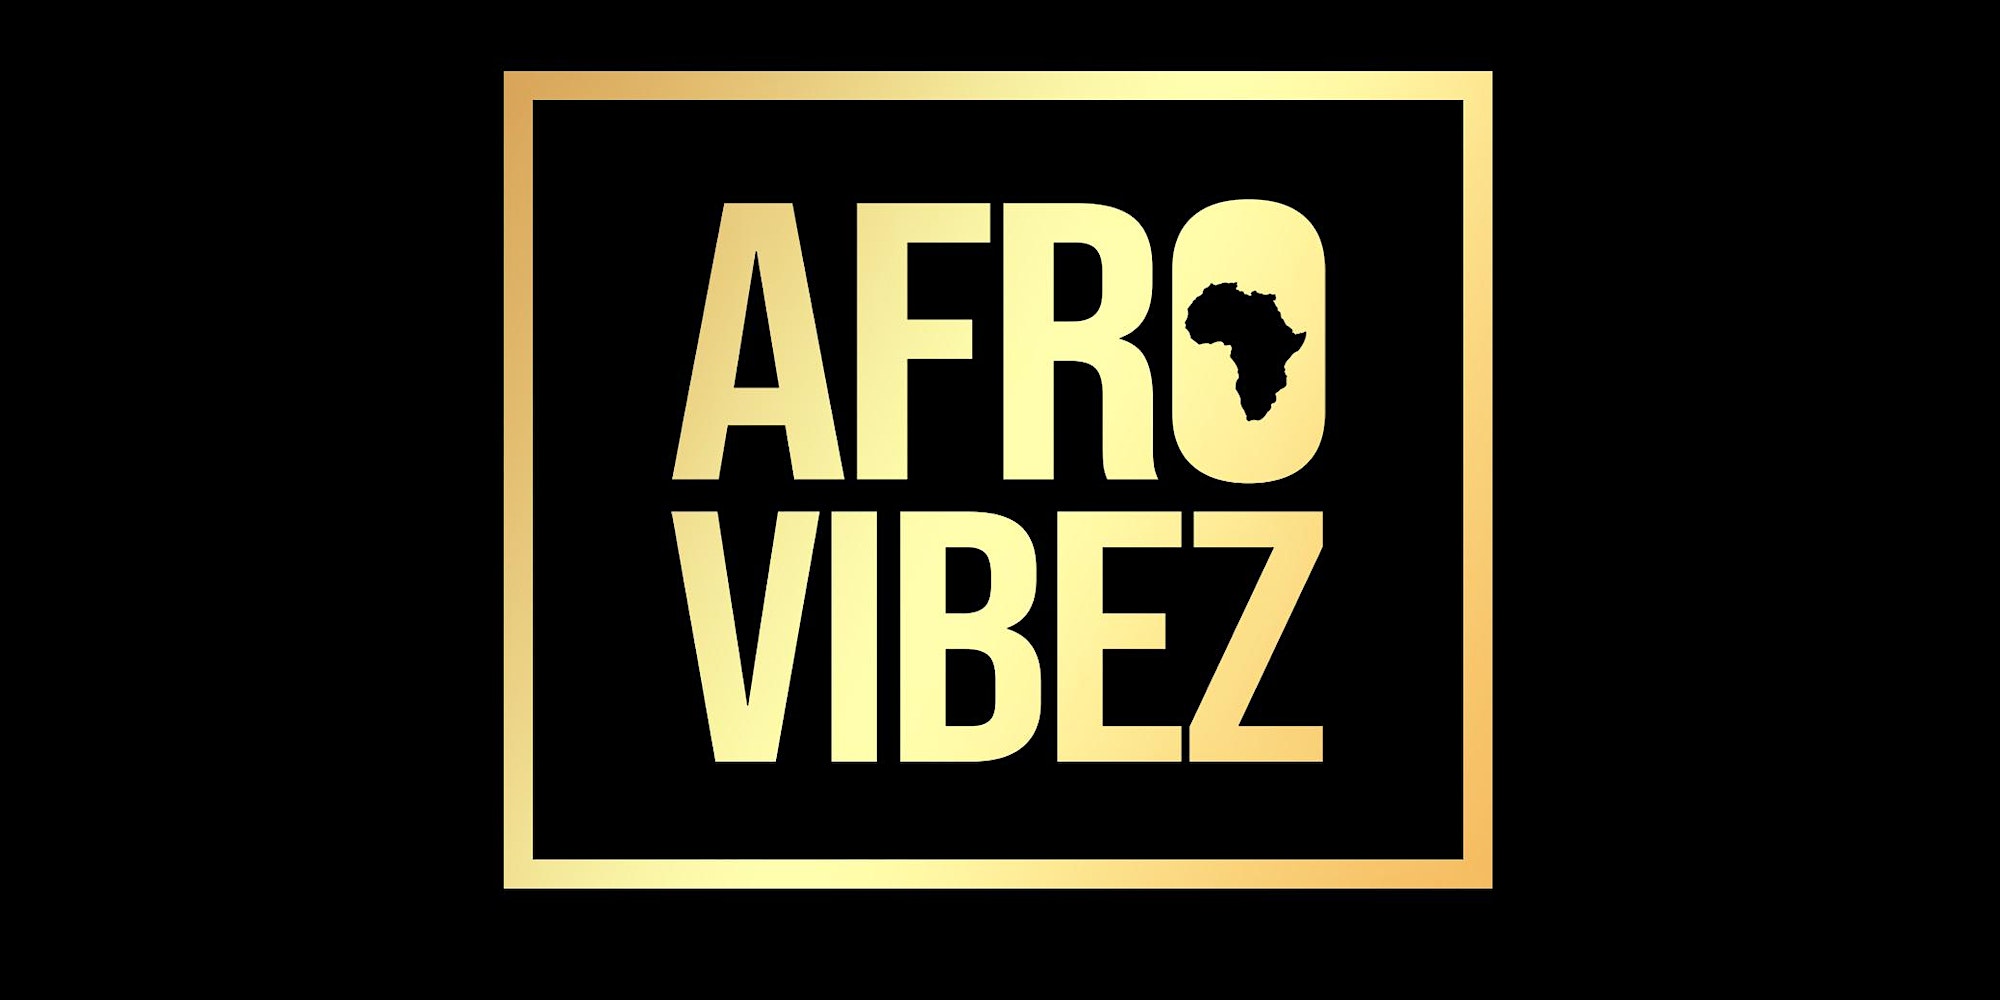 afro vibez logo on a black background.